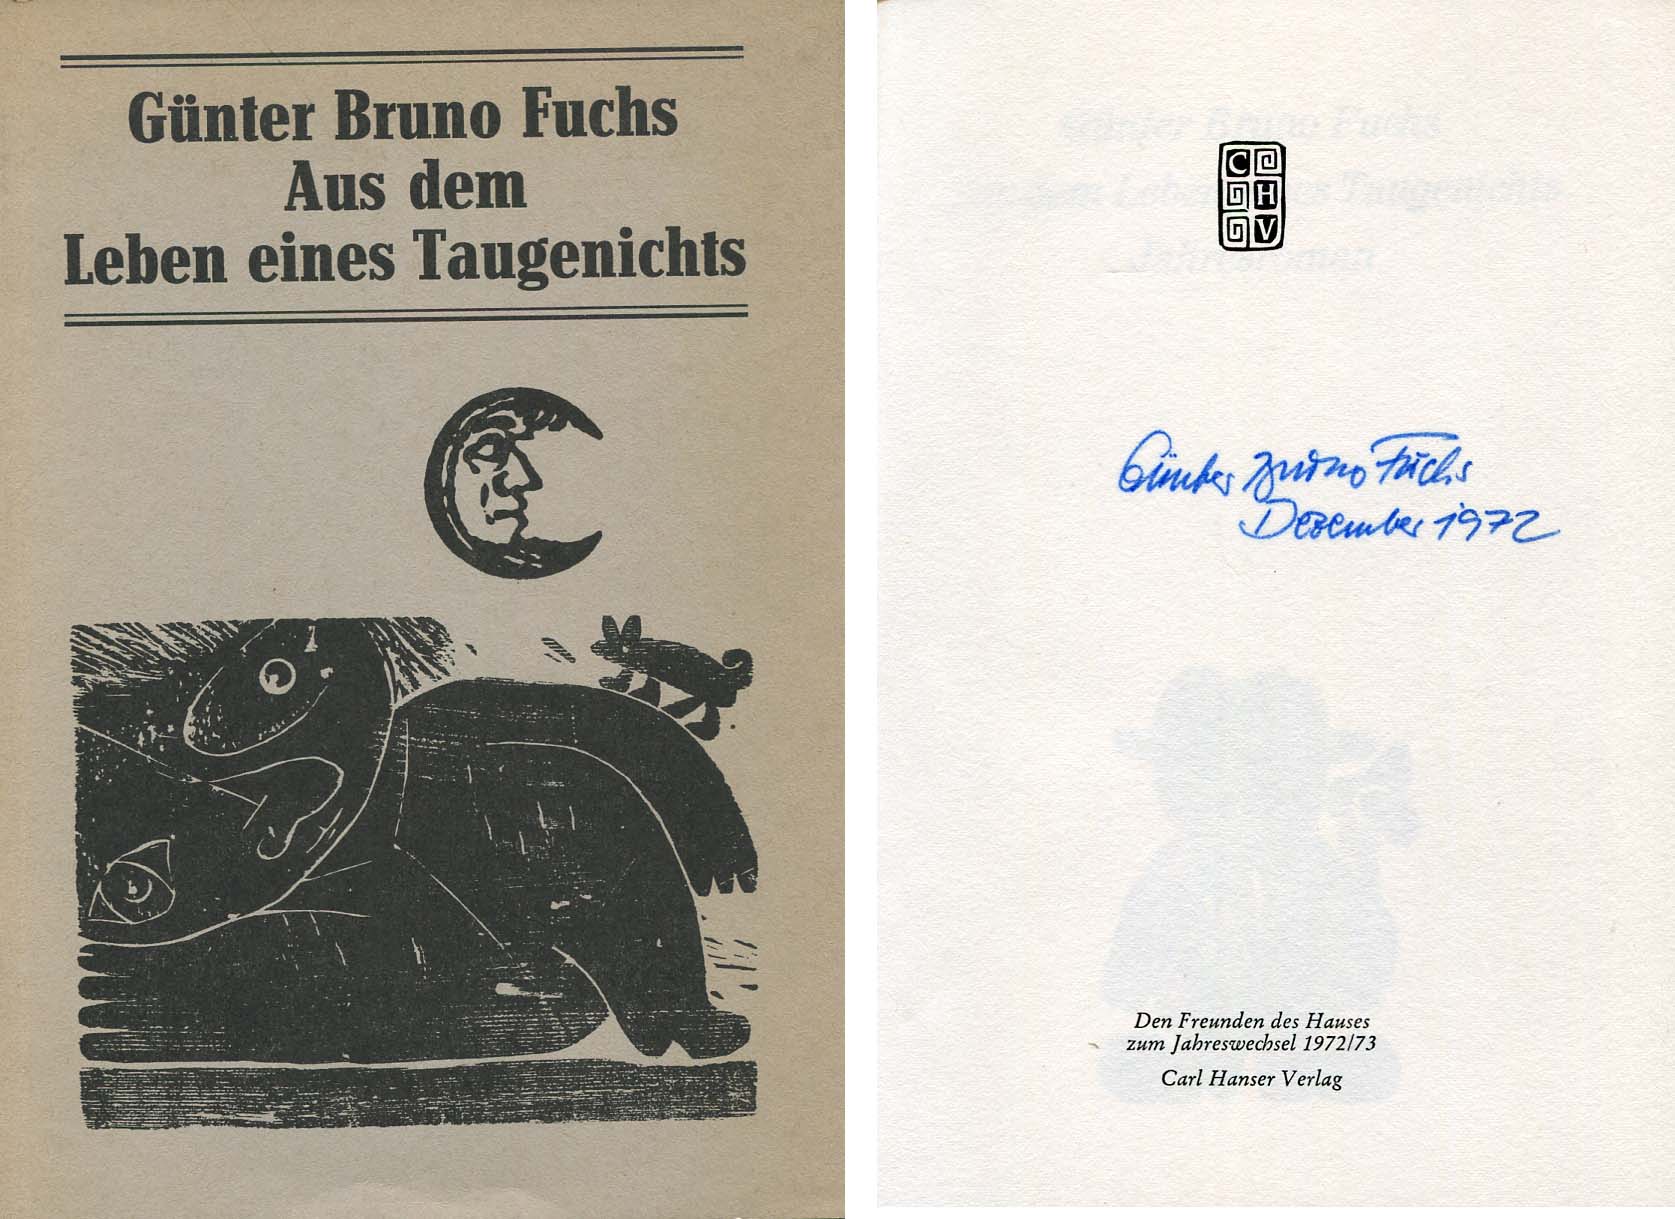 Günter Bruno Fuchs Autograph Autogramm | ID 6908164112533